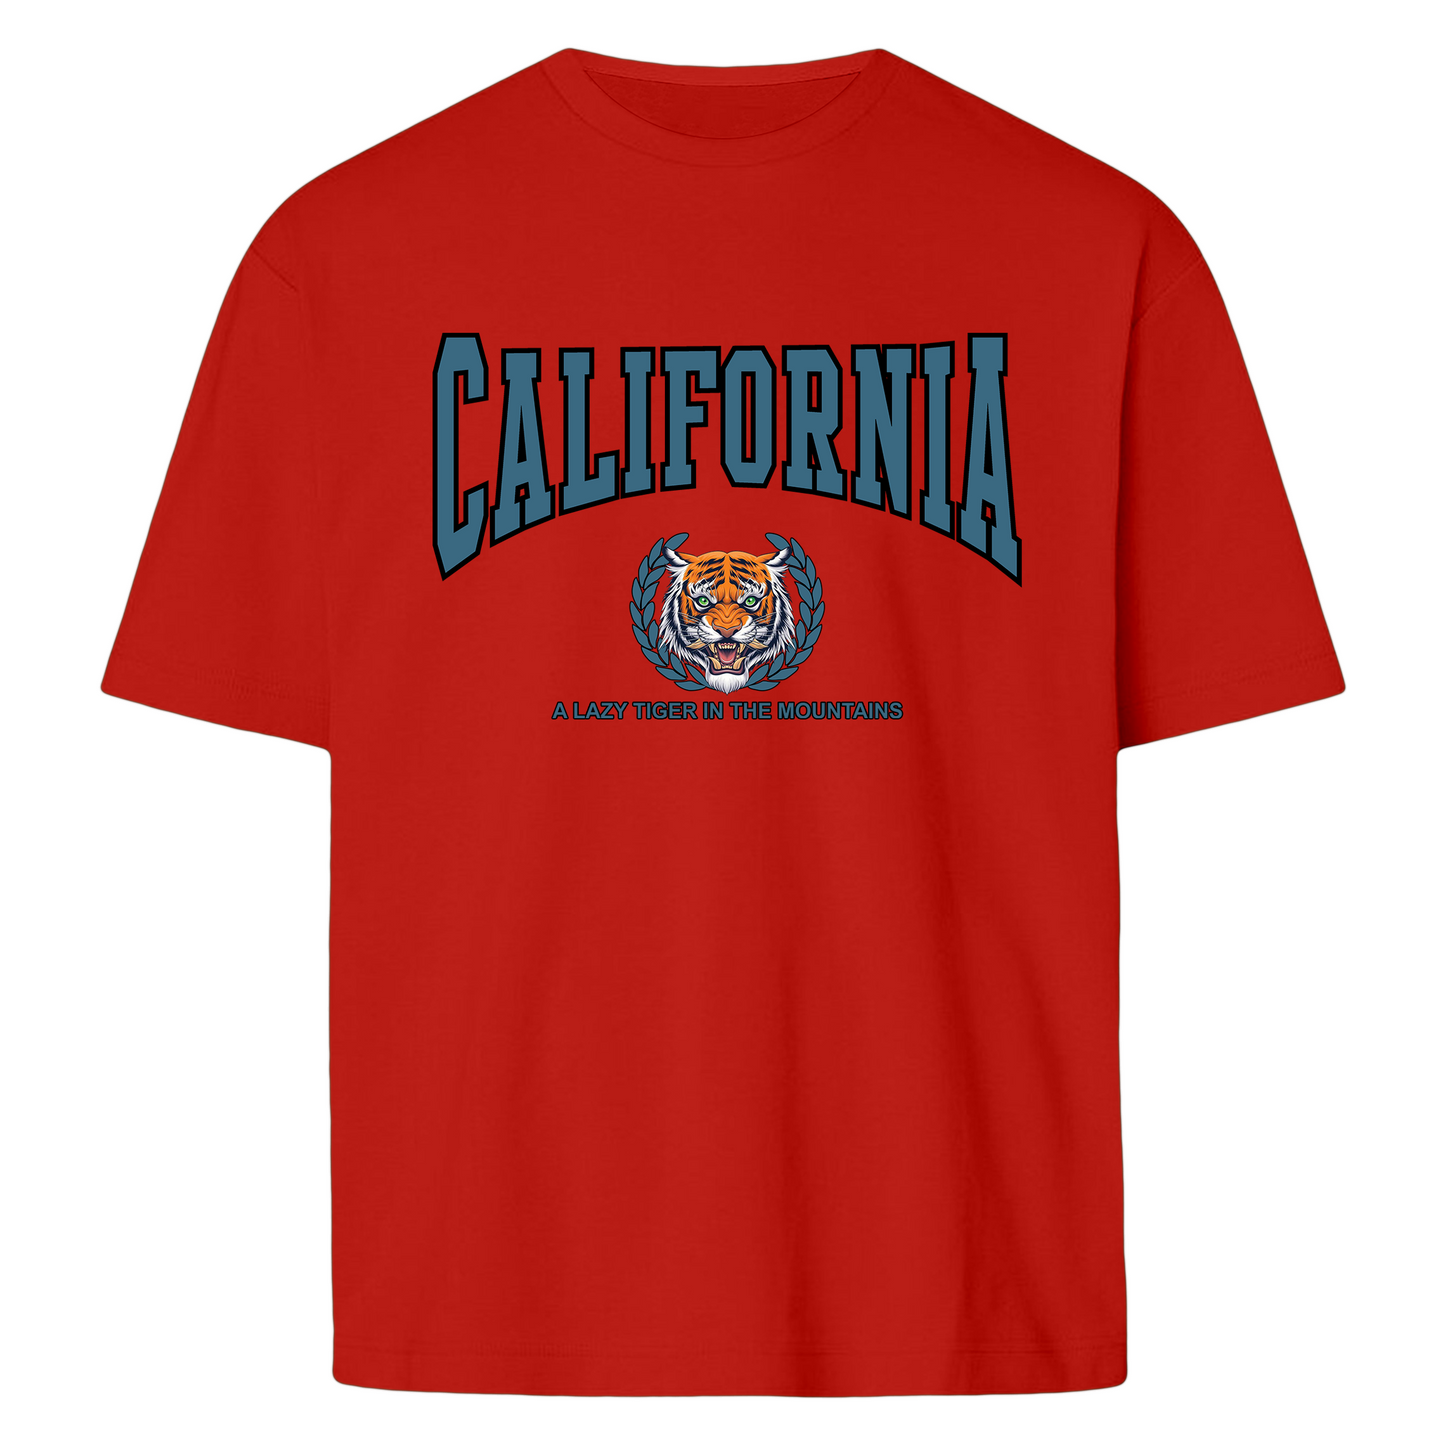 California Tiger - Oversize T-shirt